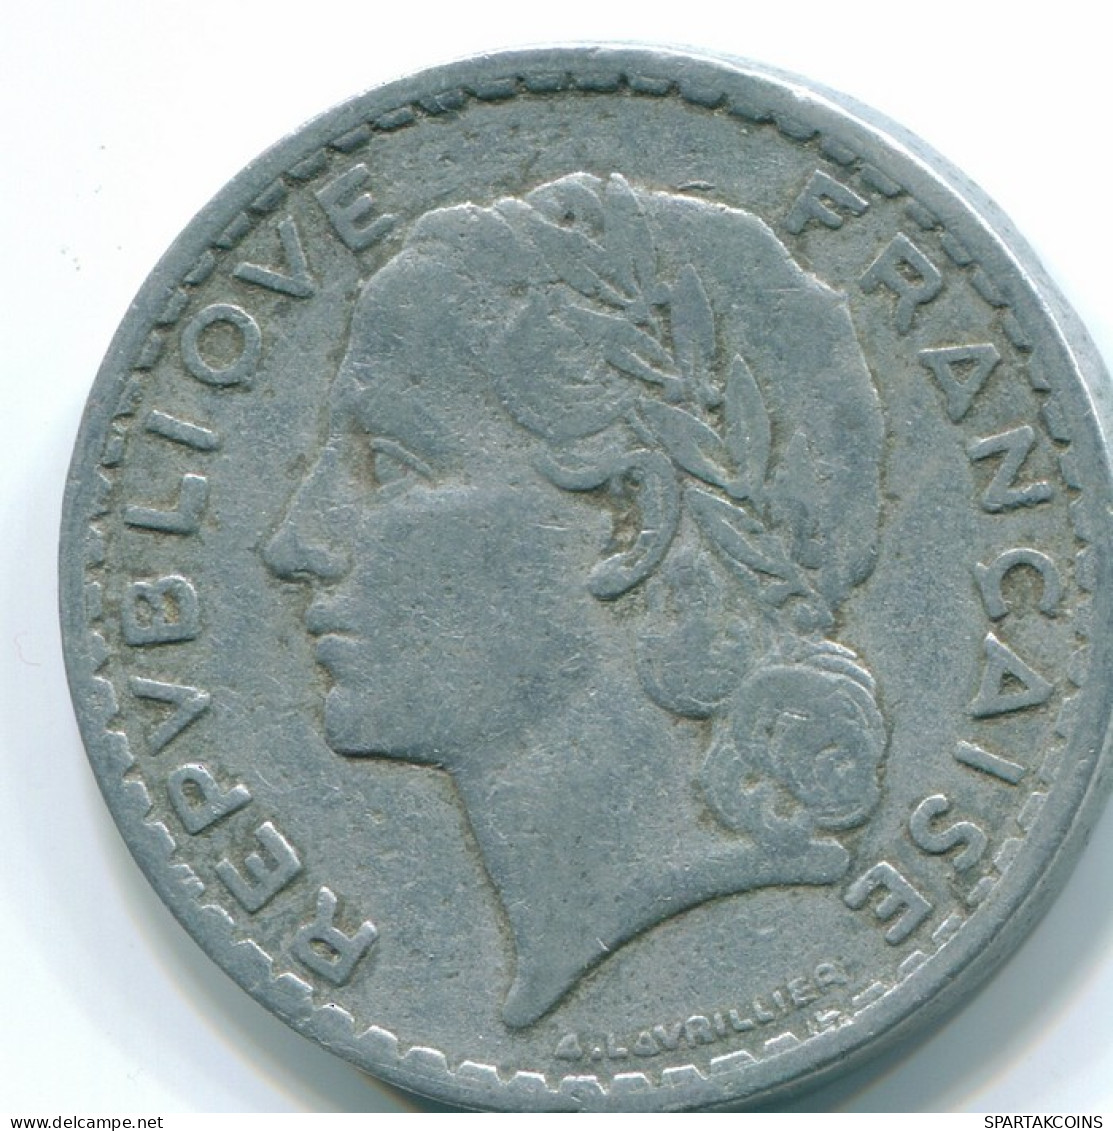 5 FRANCS 1952 FRANKREICH FRANCE KEY DATE Low Mintage #FR1015.59.D - 5 Francs